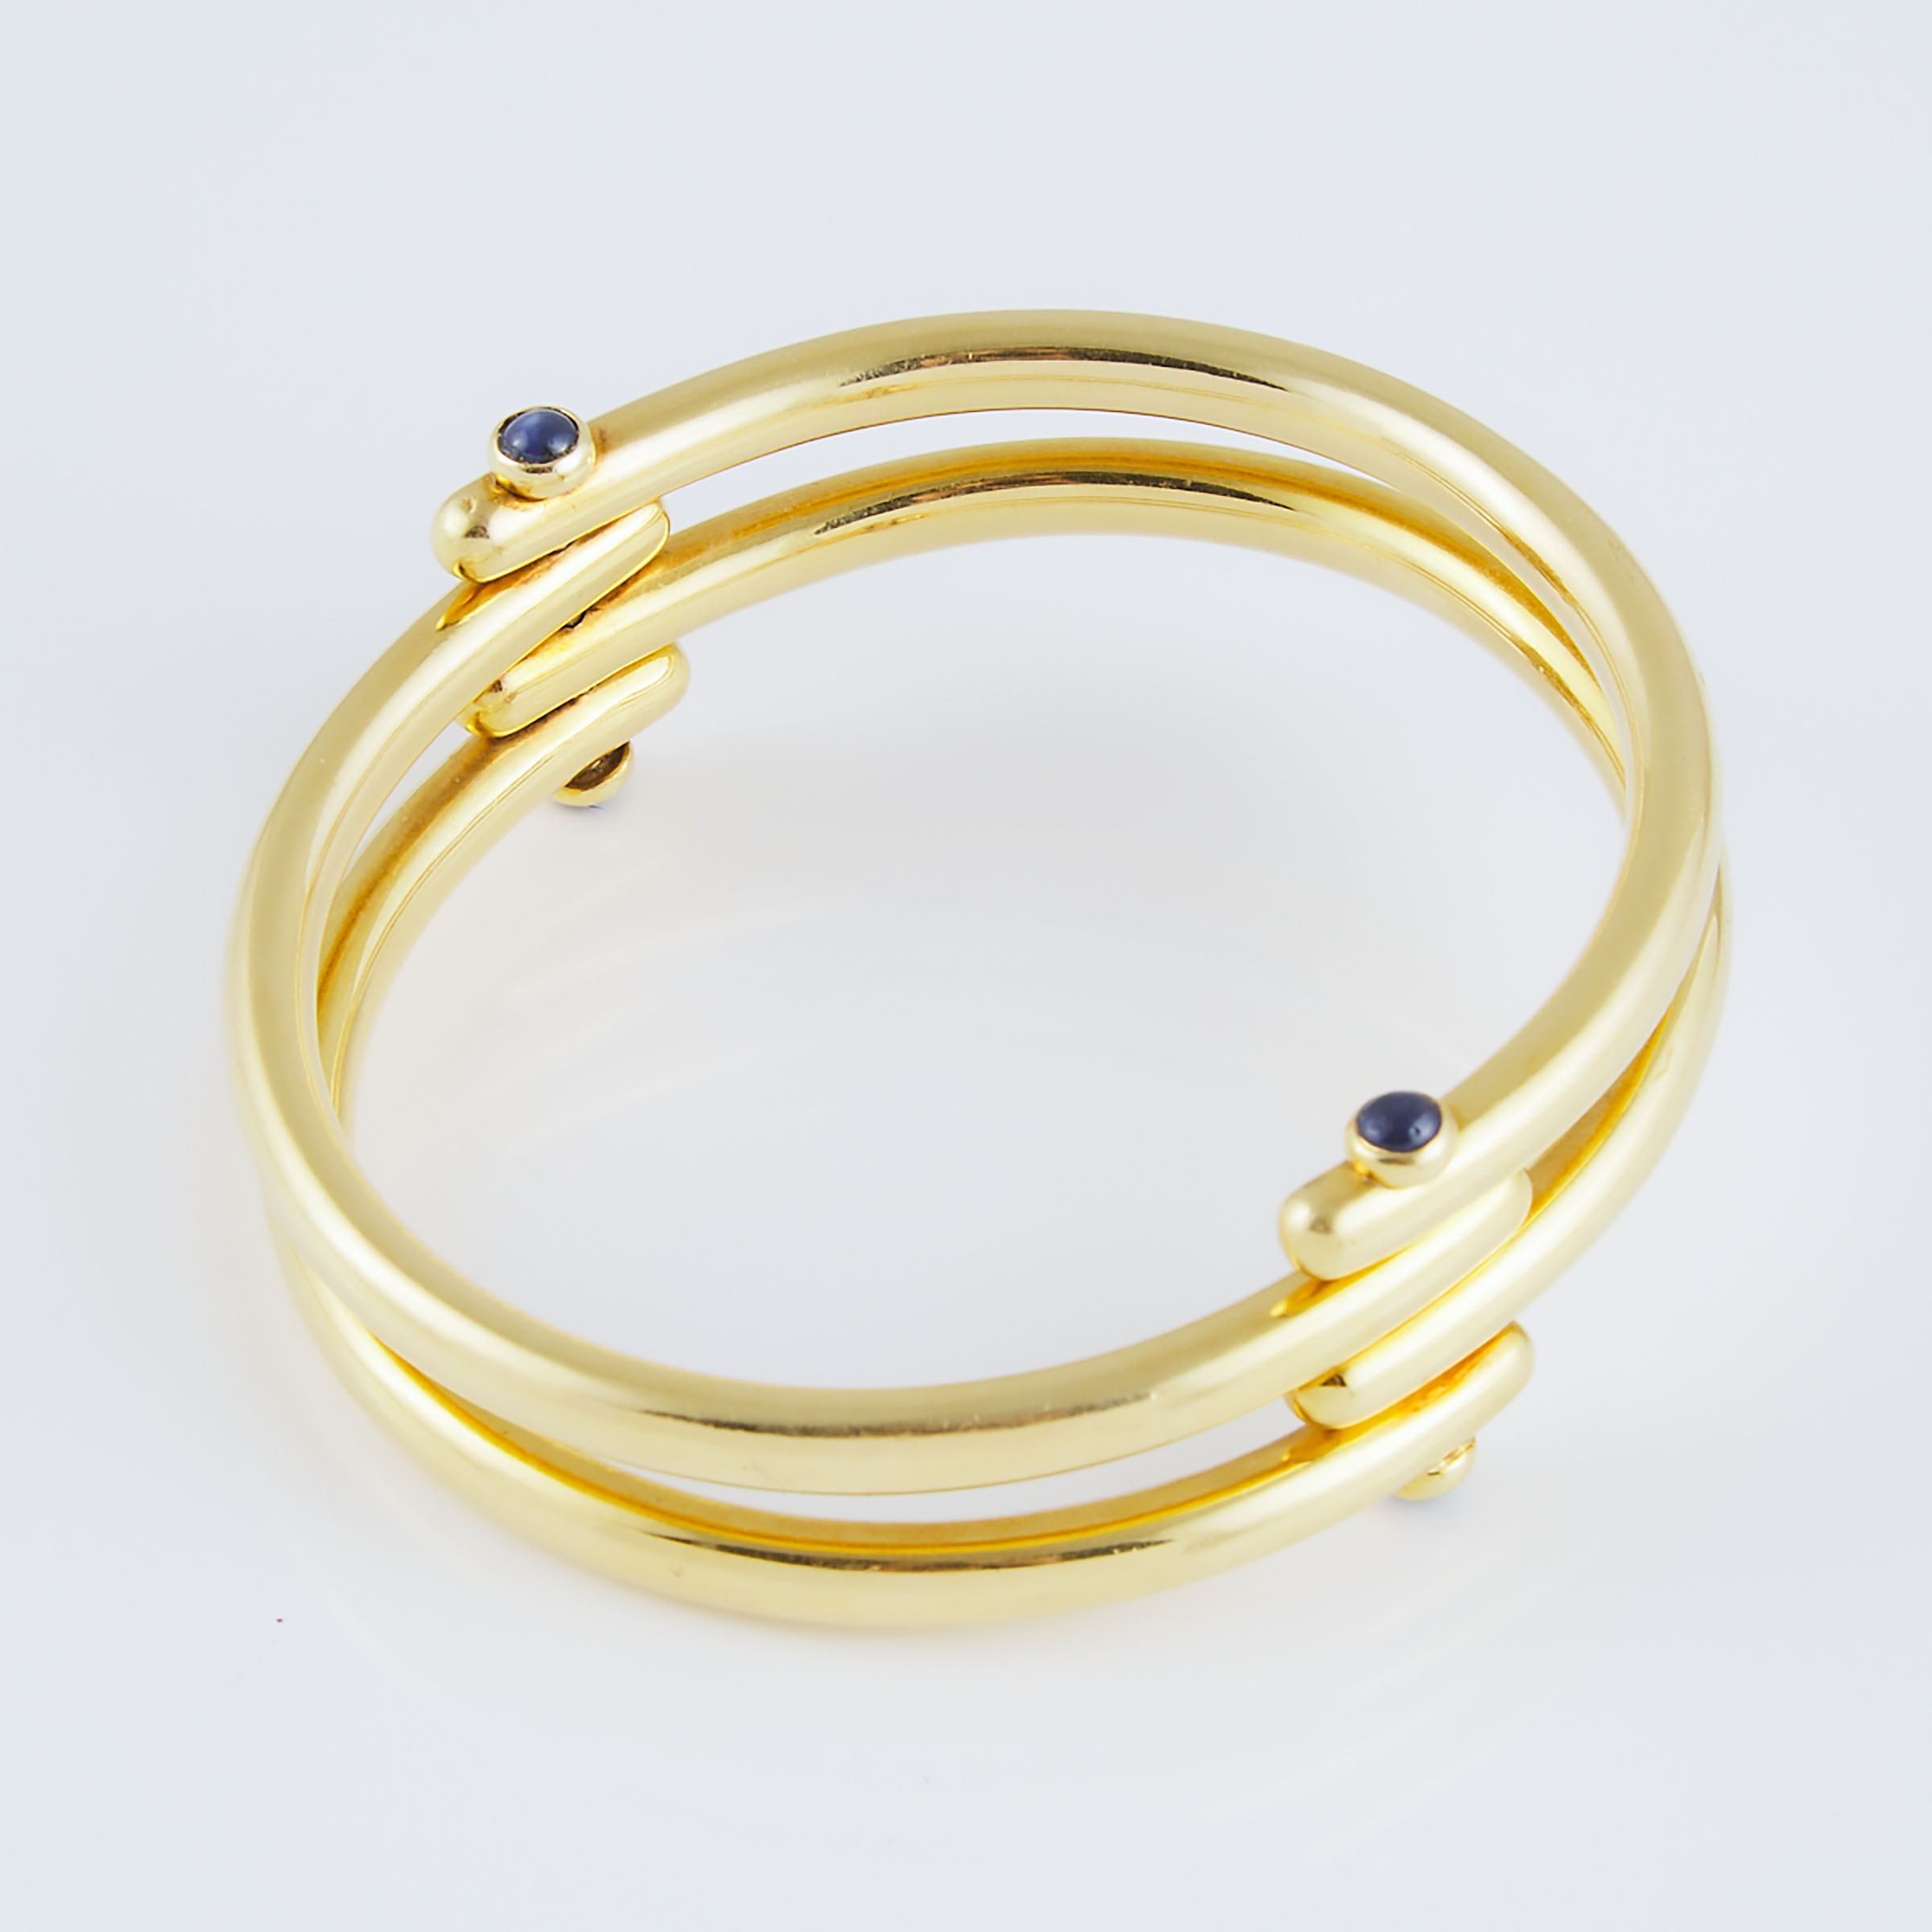 Tiffany & Co. 18k Yellow Gold Hinged Bangle